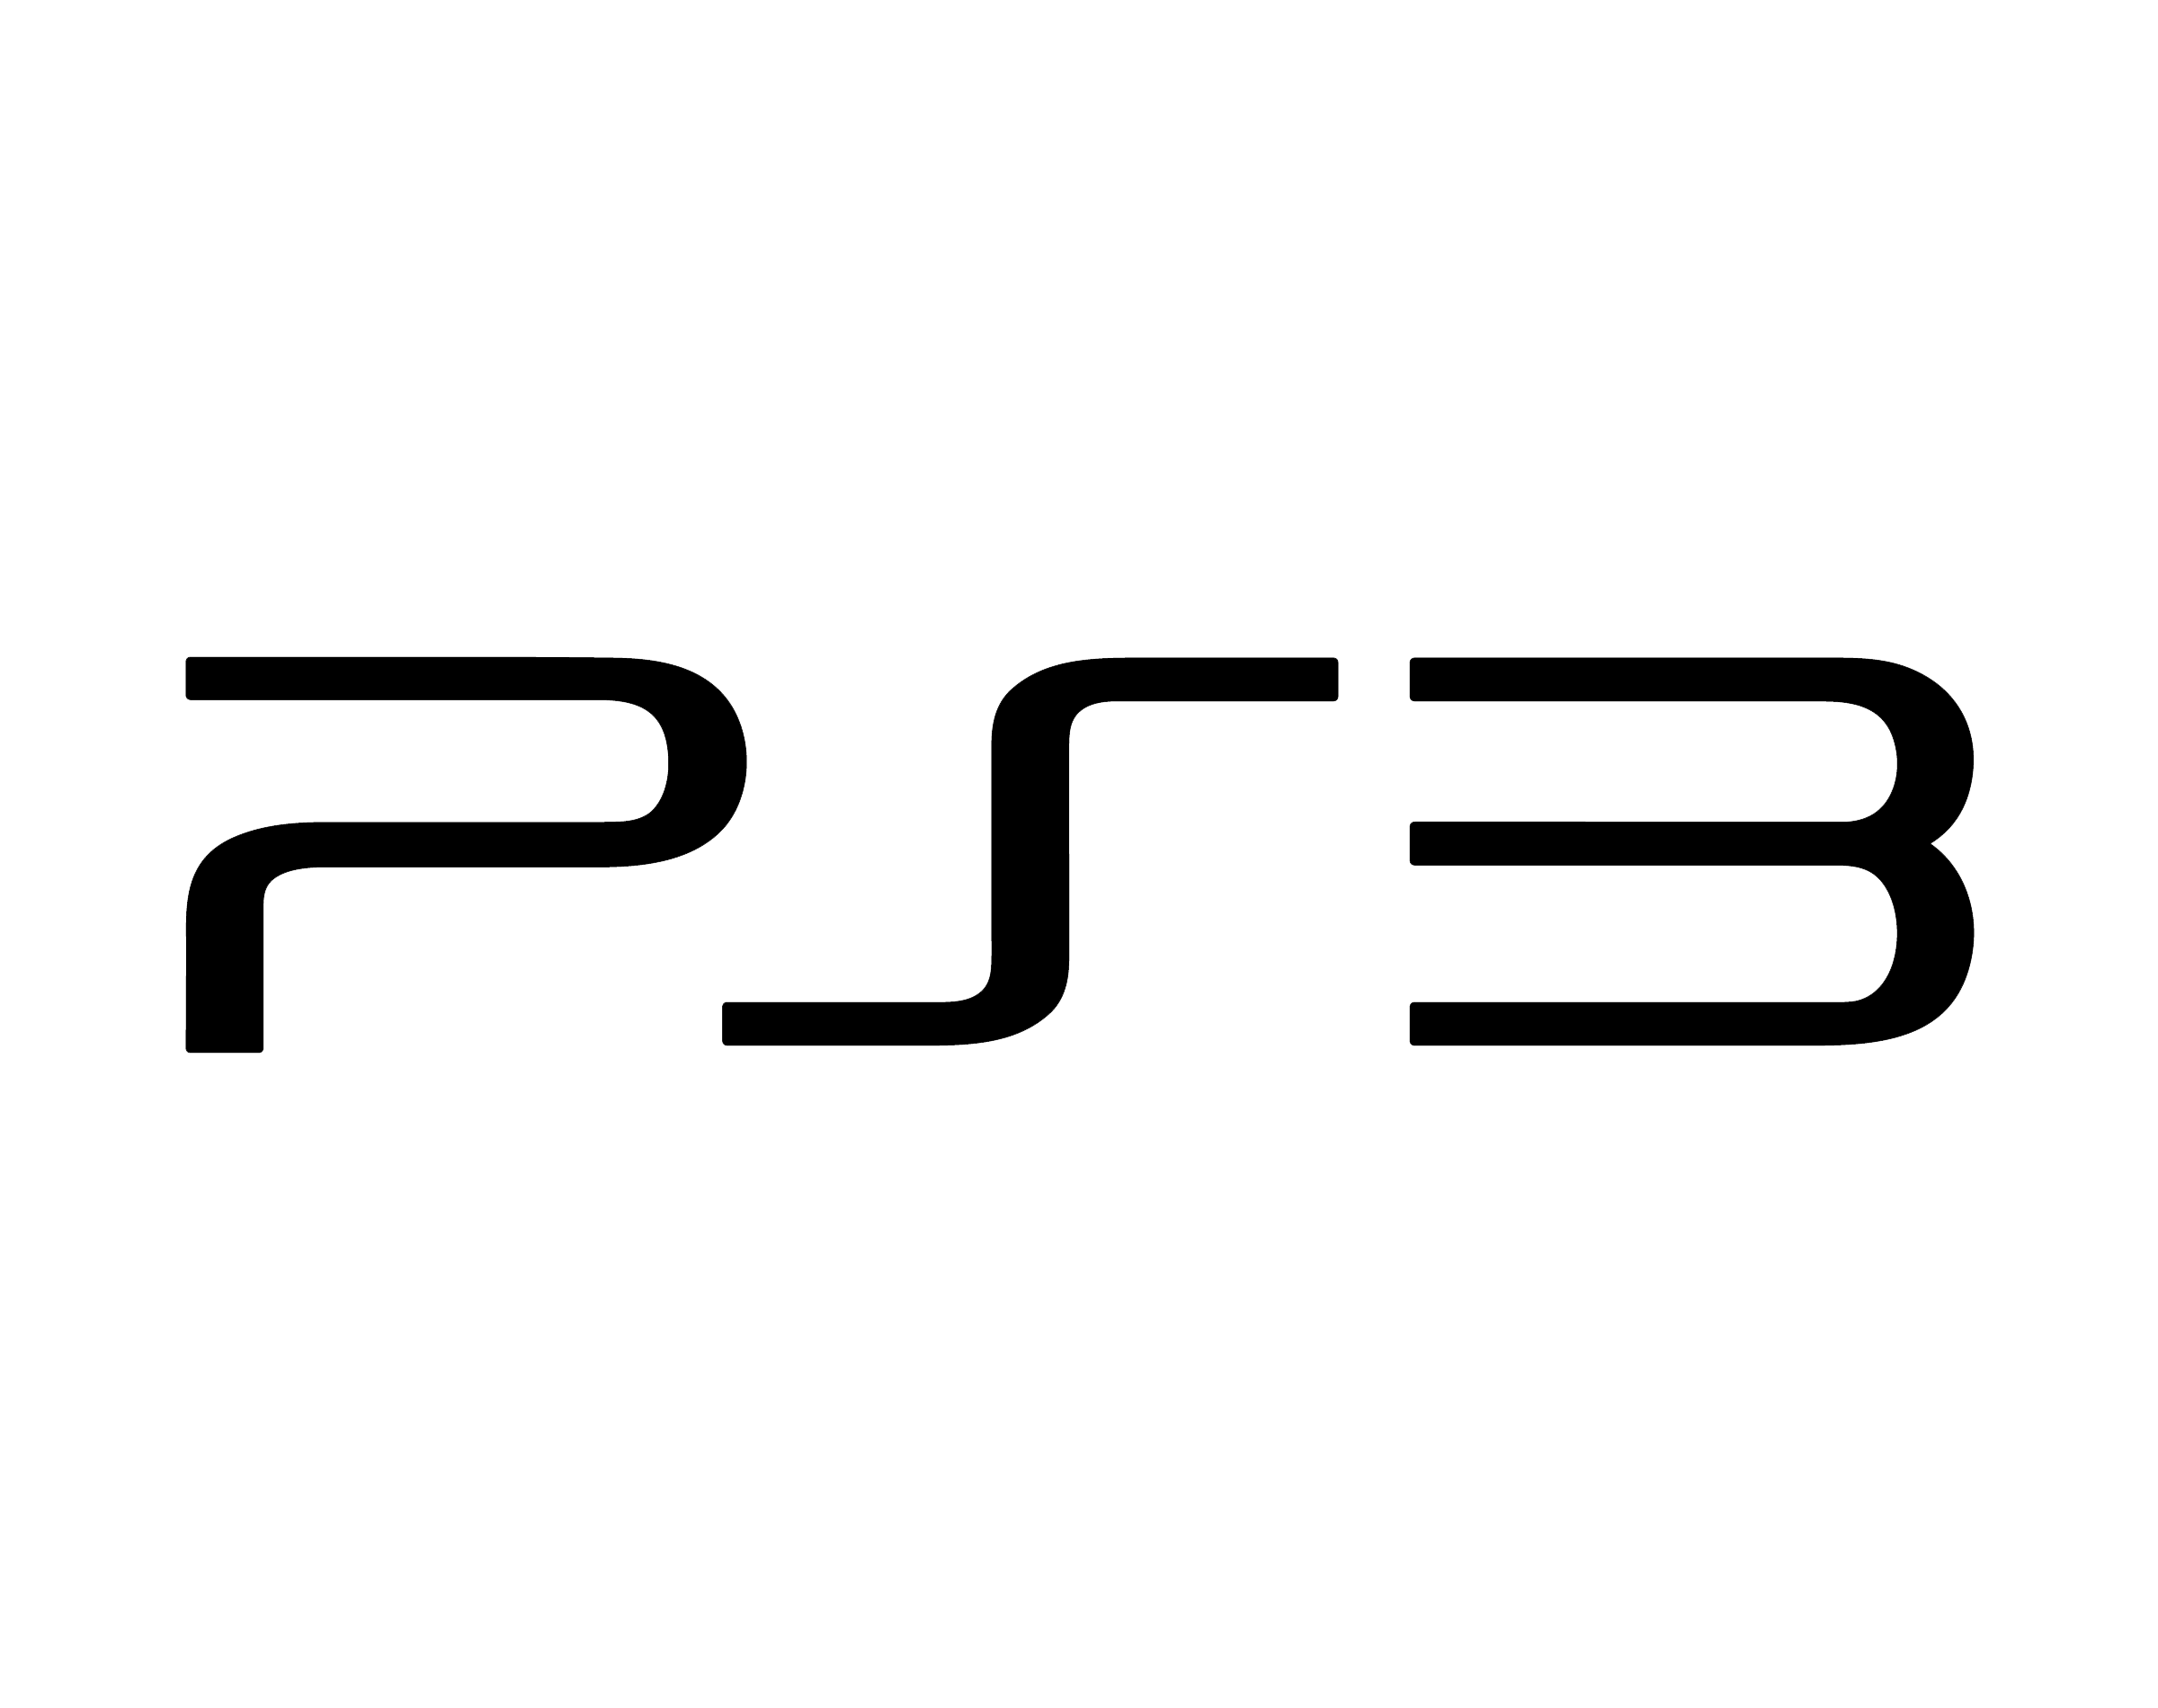 Logo Ps 3 Png - KibrisPDR